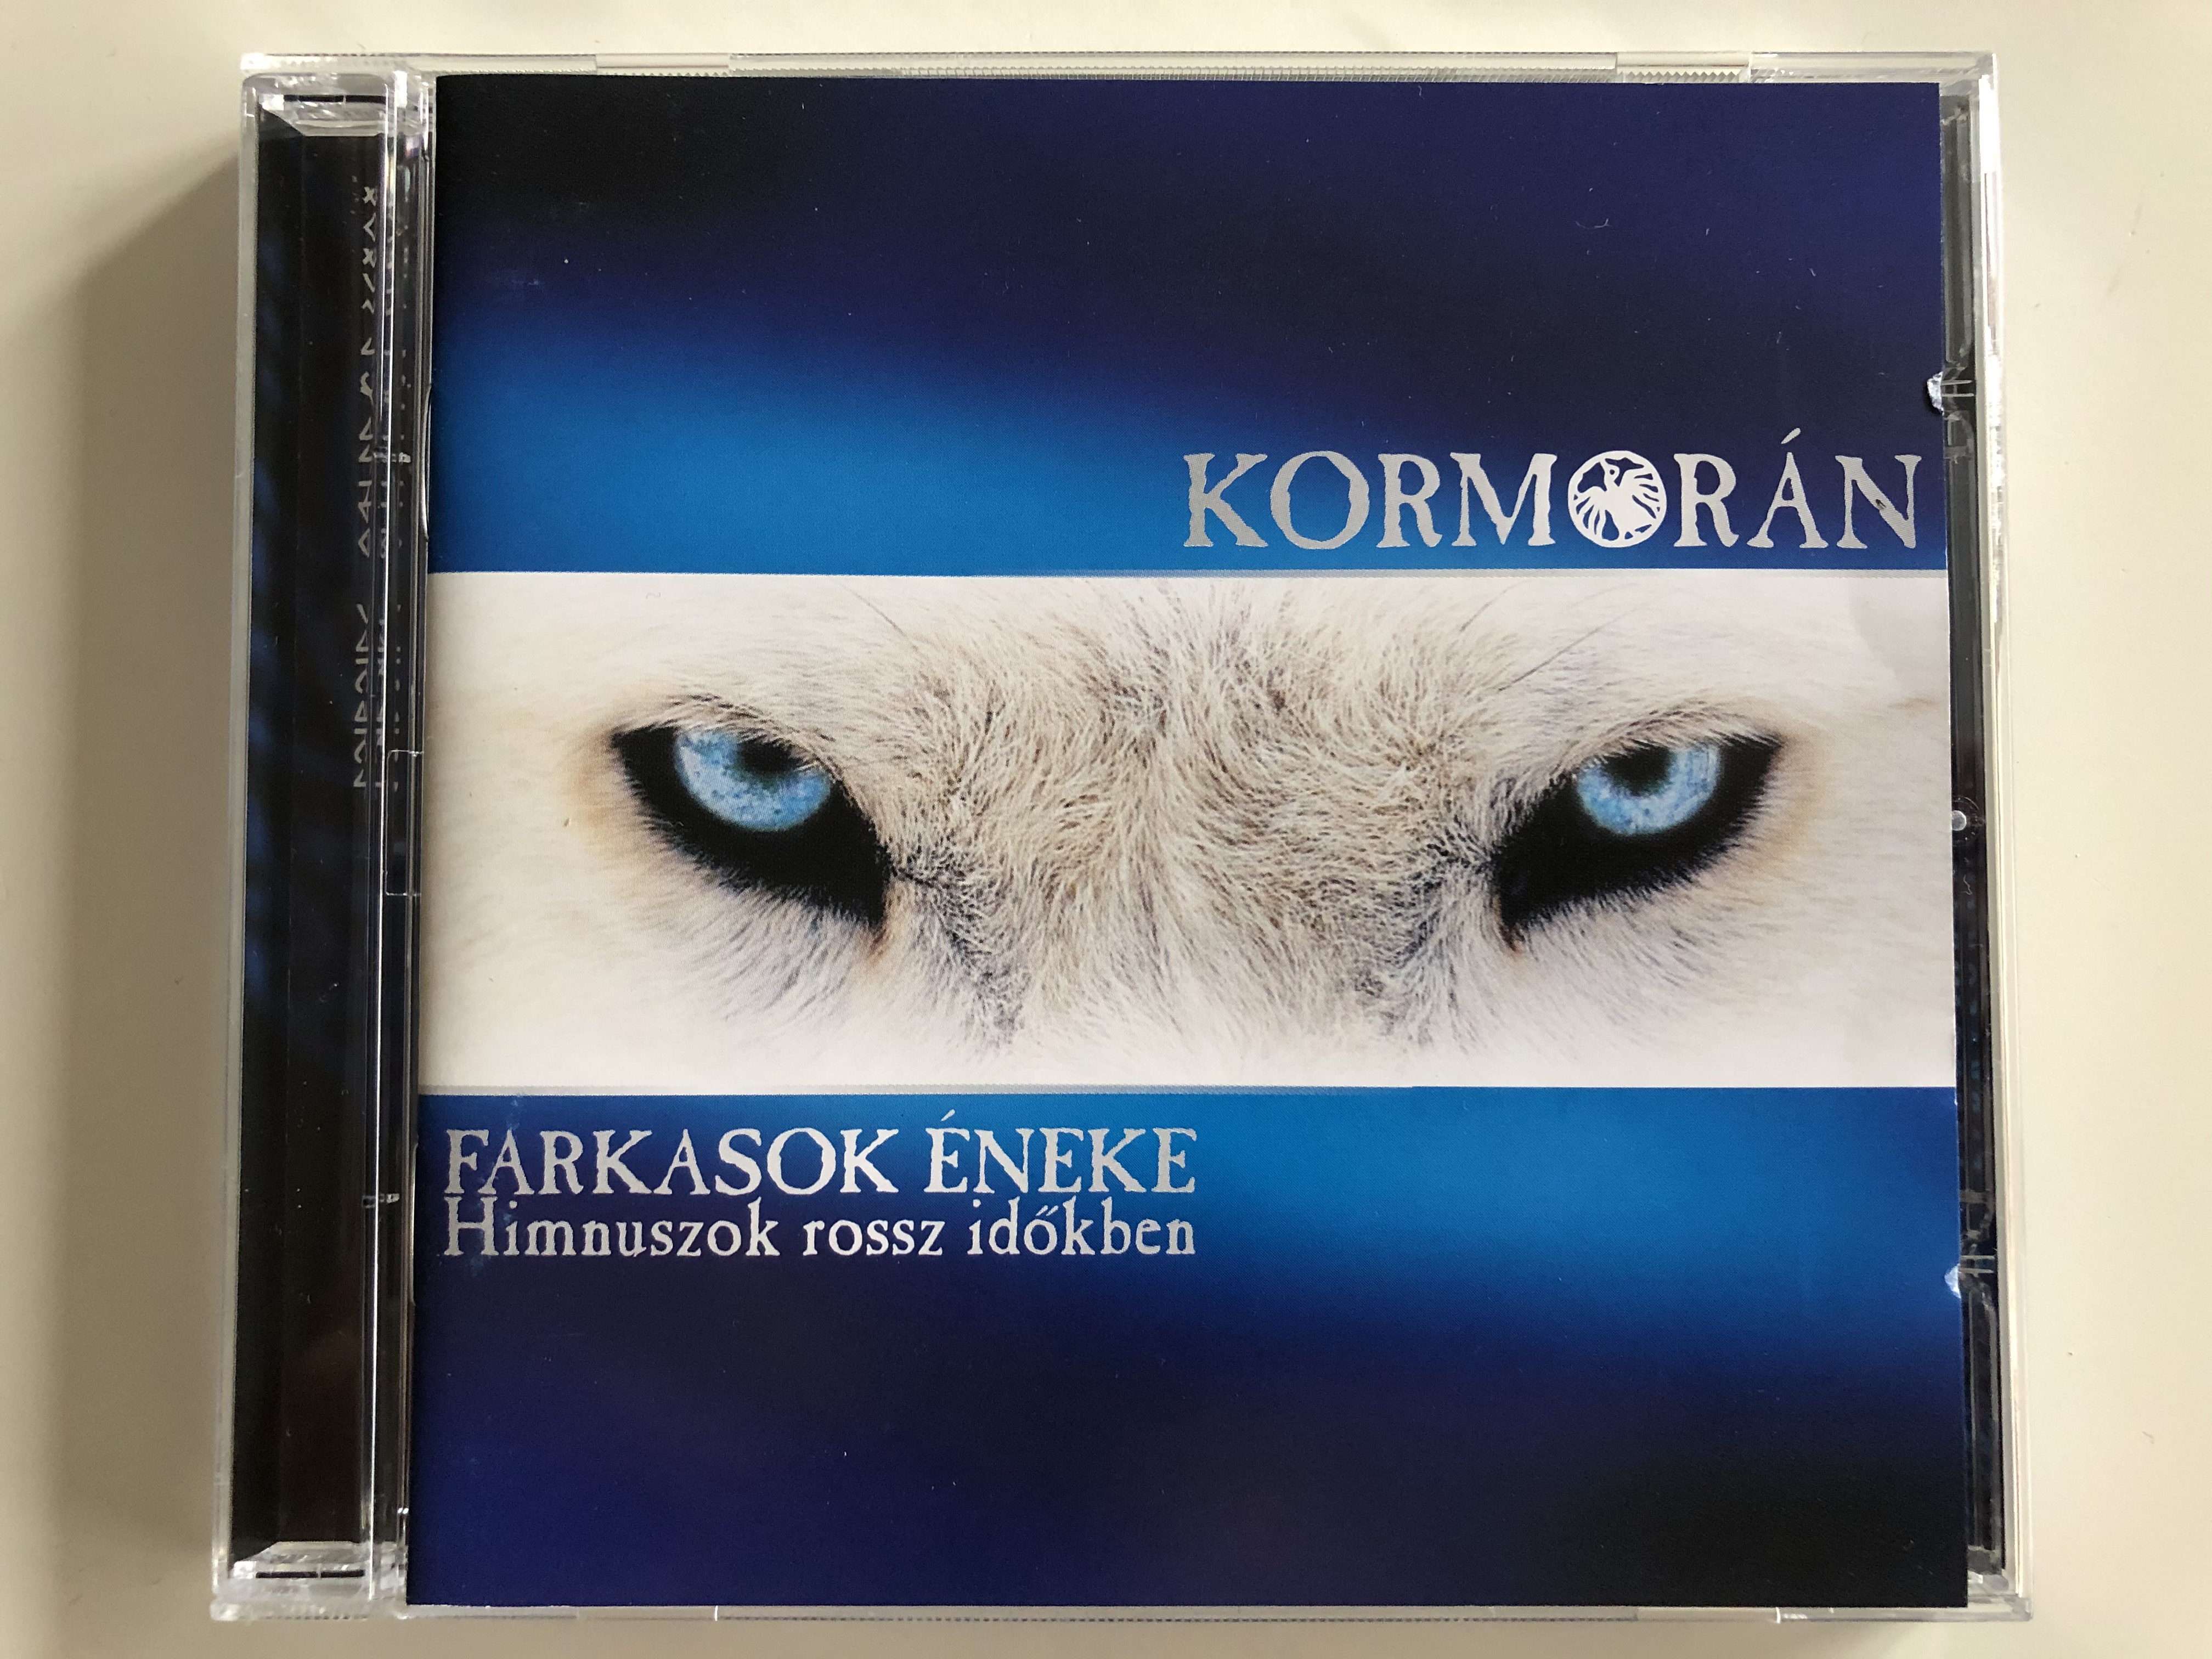 kormor-n-farkasok-neke-himnuszok-rossz-id-kben-hungaroton-audio-cd-2008-hcd-71244-1-.jpg